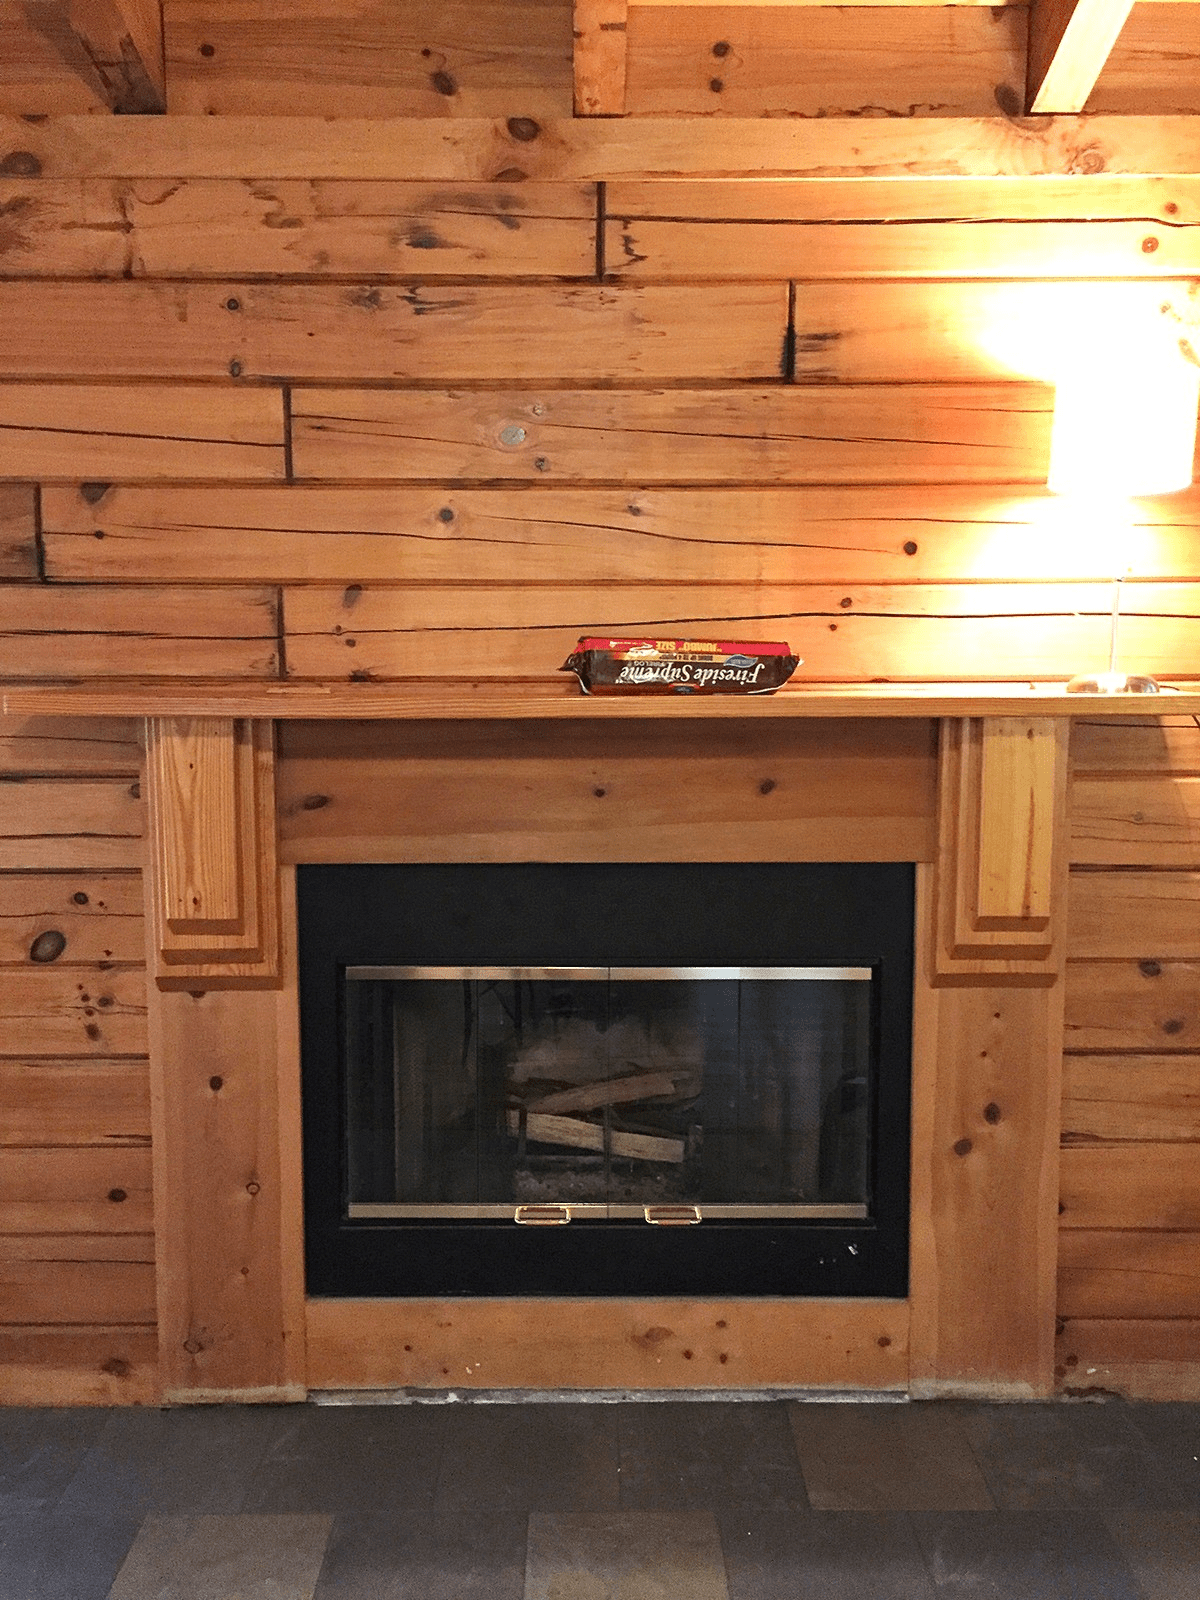 My DIY Stone Veneer Fireplace Project